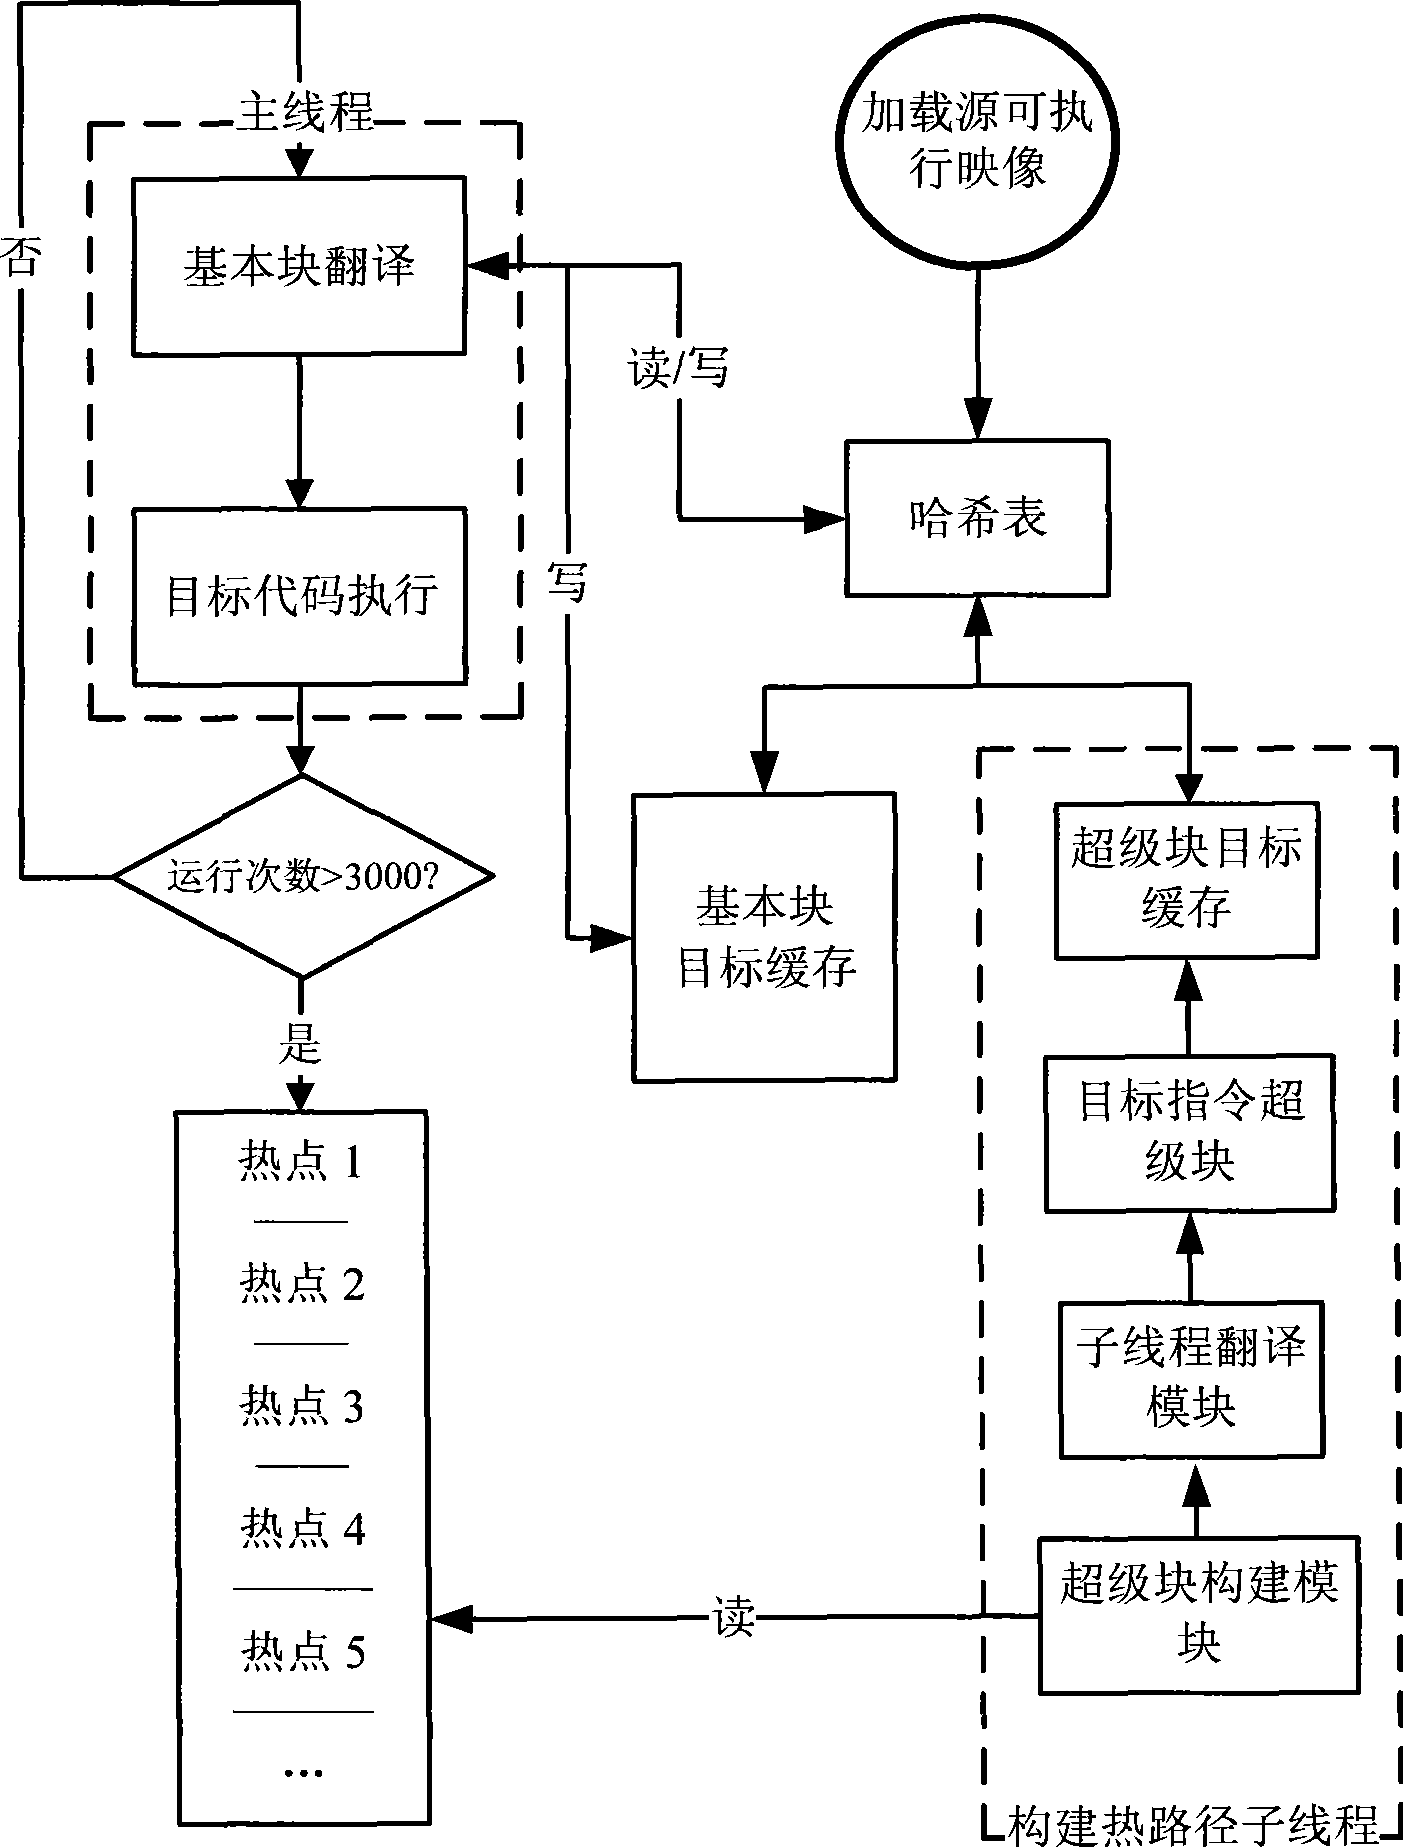 Multi-core multi-threading construction method for hot path in dynamic binary translator